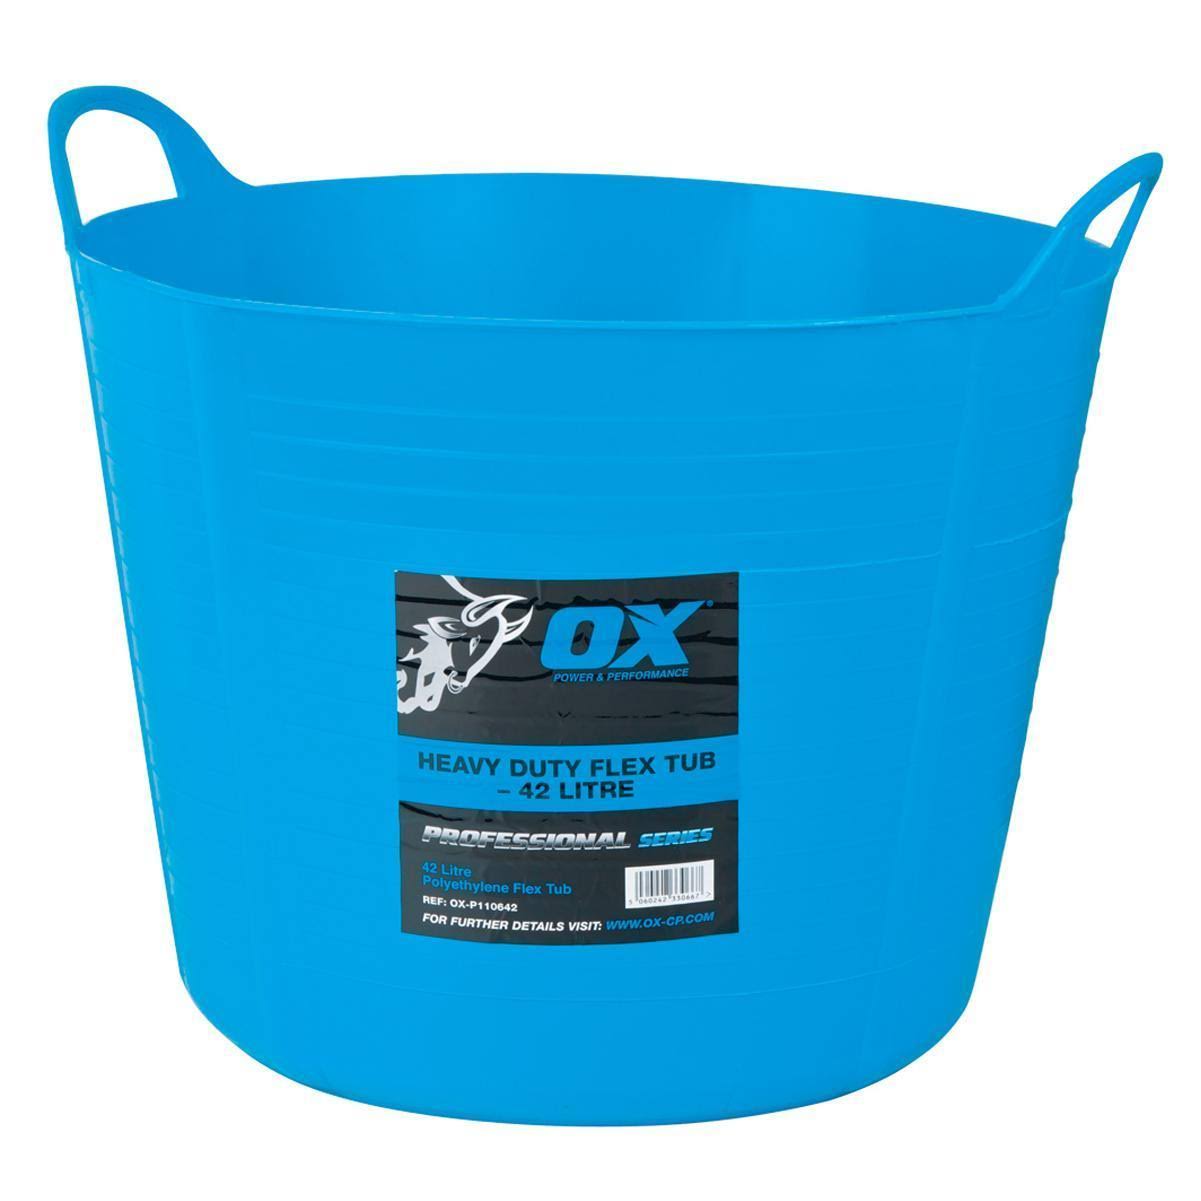 Ox Pro Heavy Duty Flexi Tub - Blue, 42L